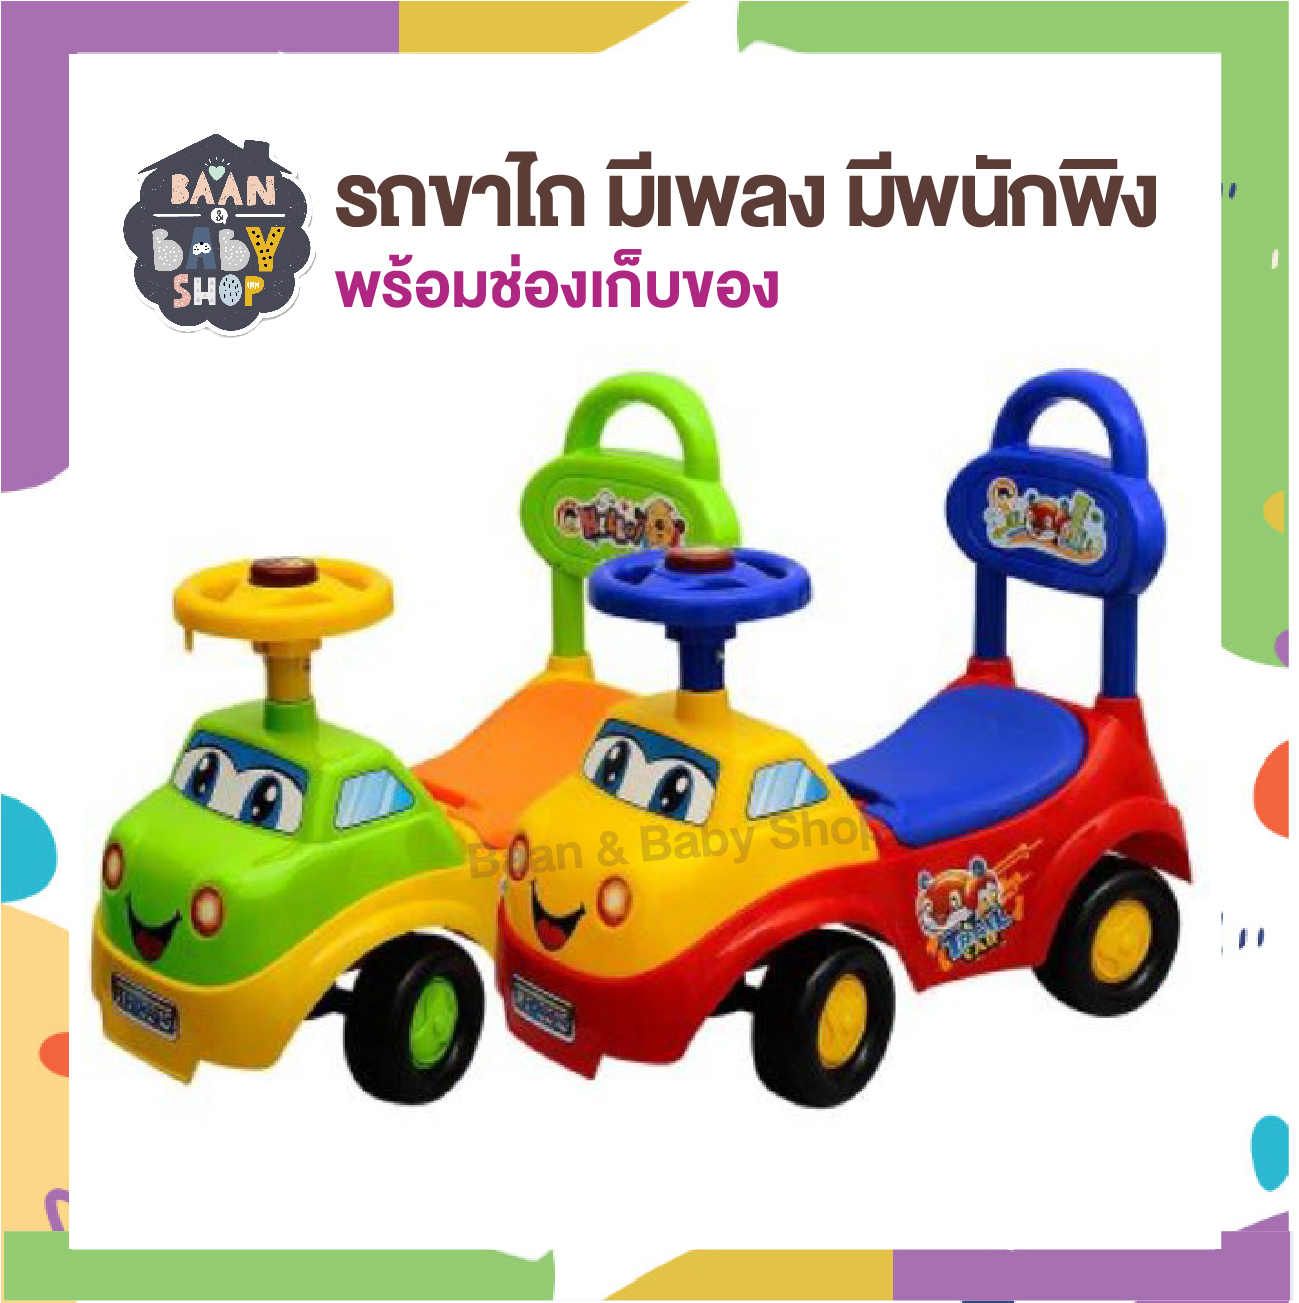 Baan & Baby Shop รถขาไถ มีเพลง มีพนักพิง พร้อมช่องเก็บของ รถไถขา รถเด็กเล่น Vehicles toys for Kids Toys Car buddies HT-5515